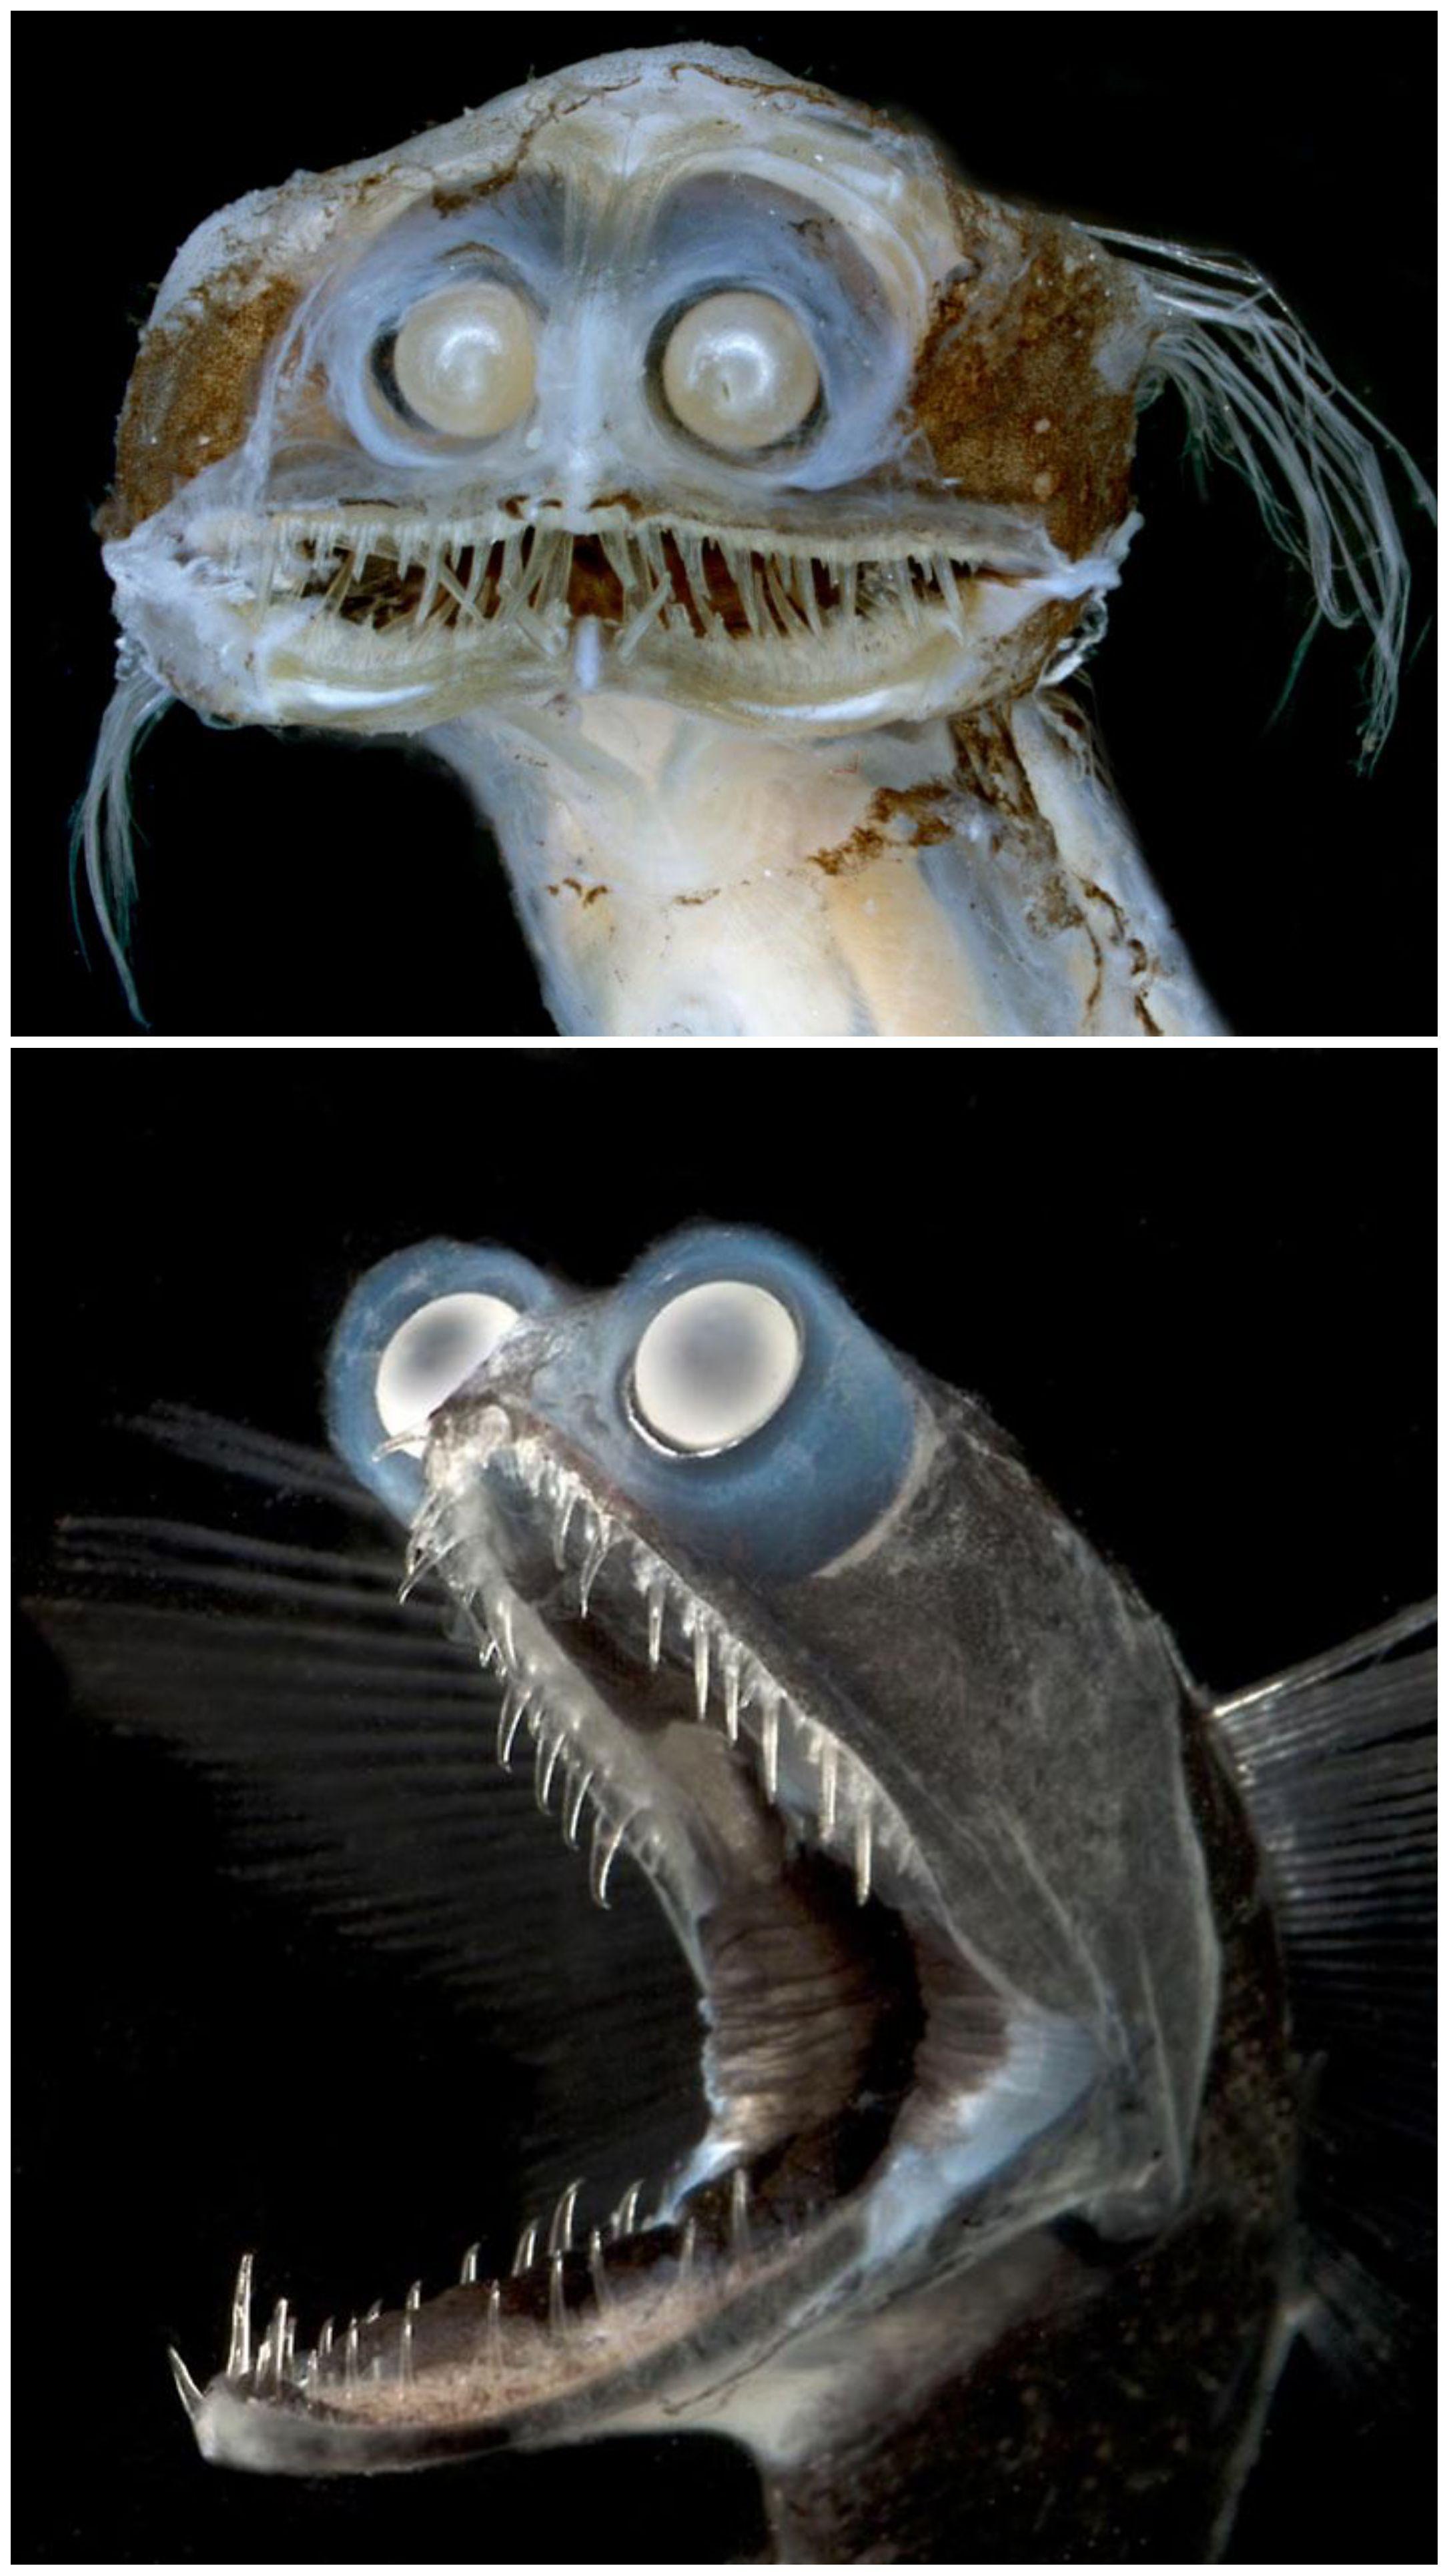 Meet the deep sea telescope fish called Charles. 